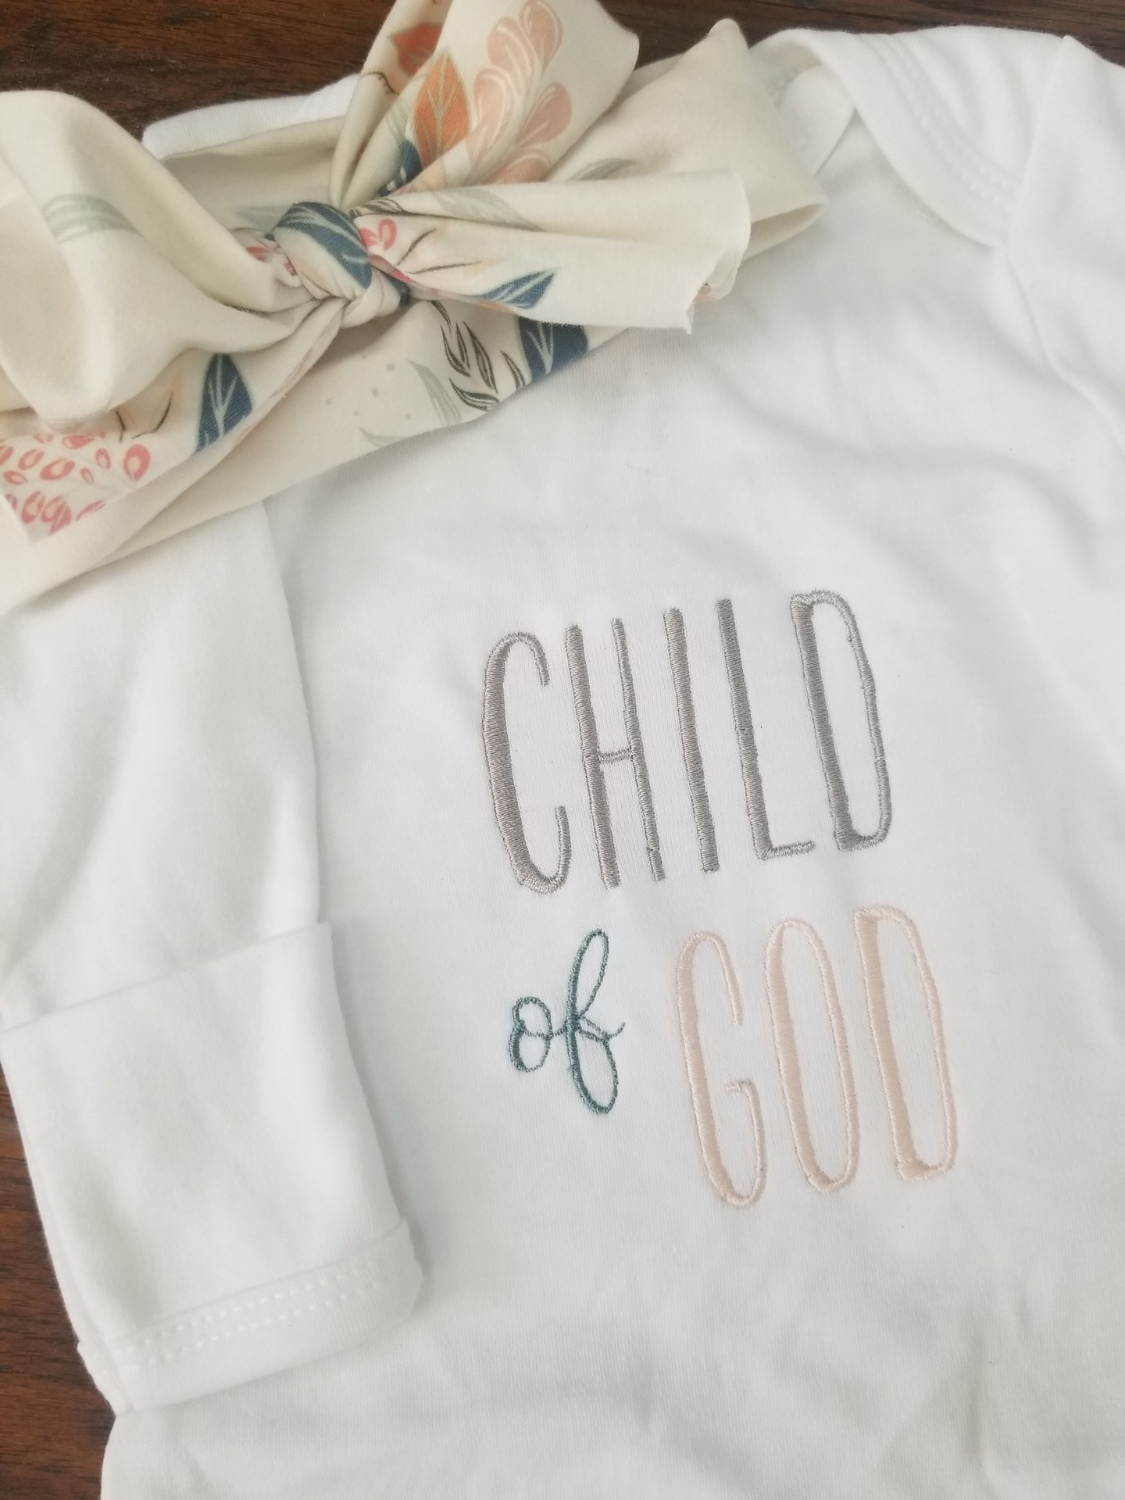 Newborn Baby Gown CHILD OF GOD-GIRL